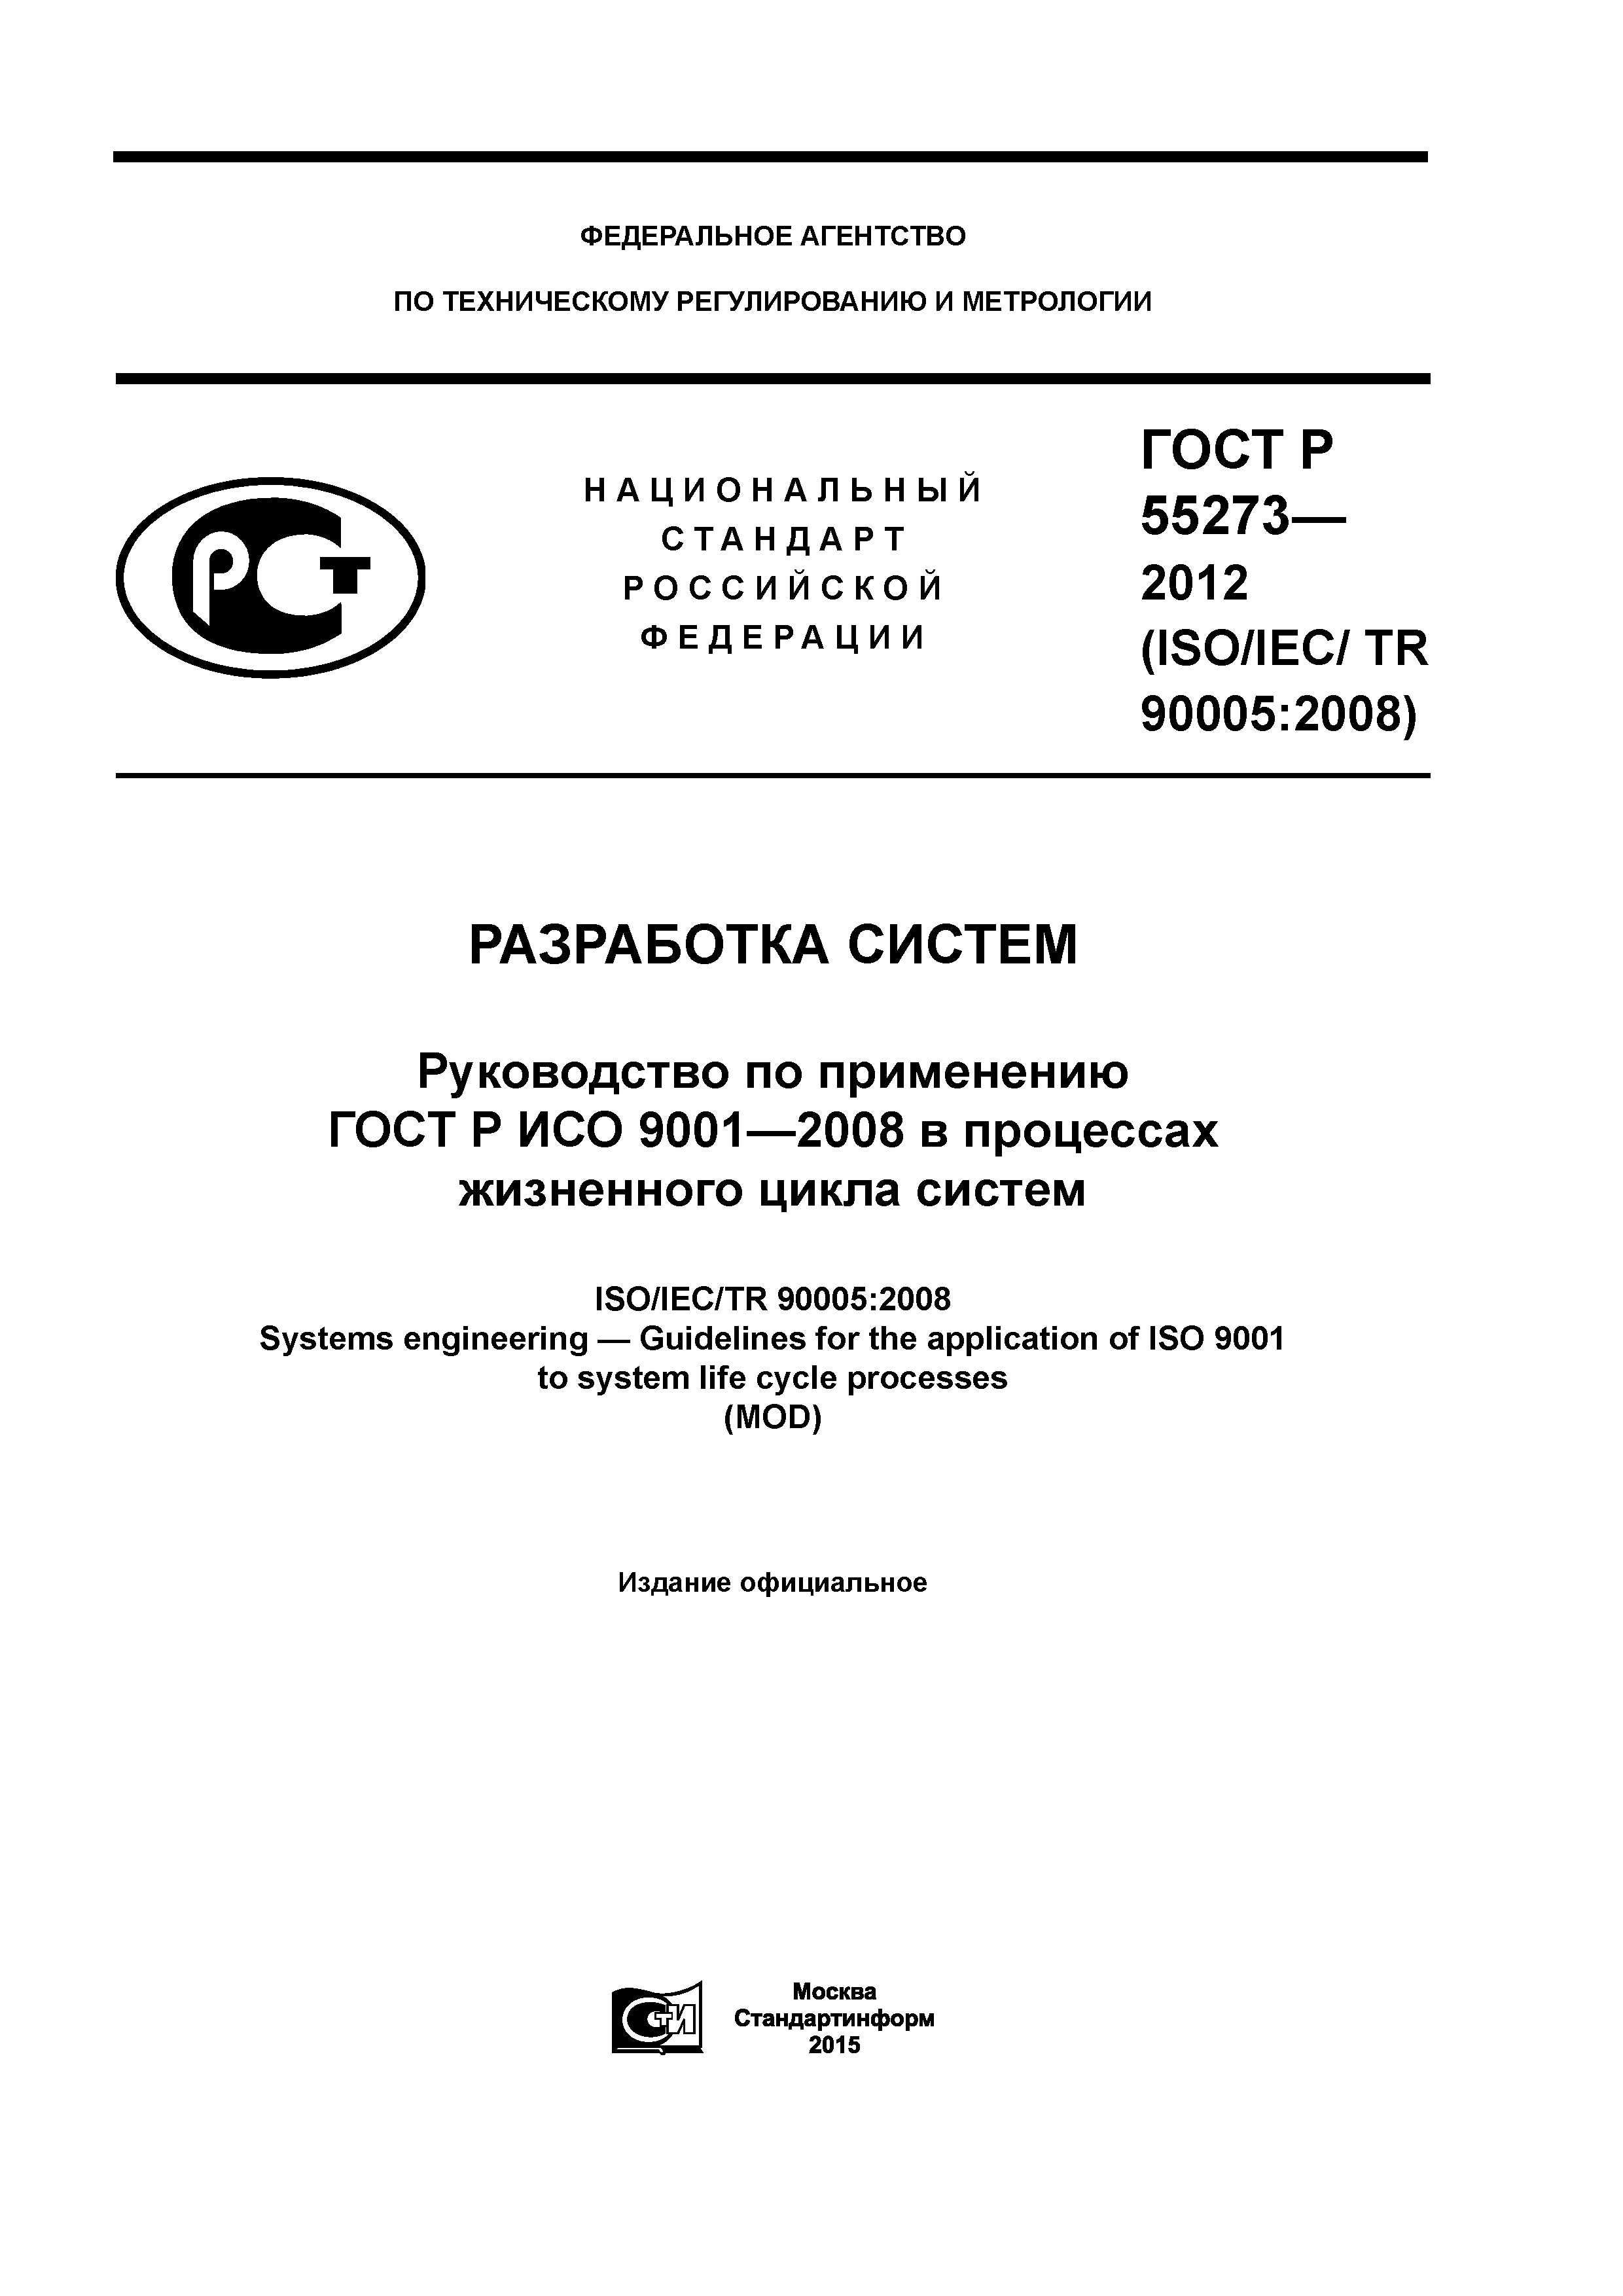 ГОСТ Р 55273-2012